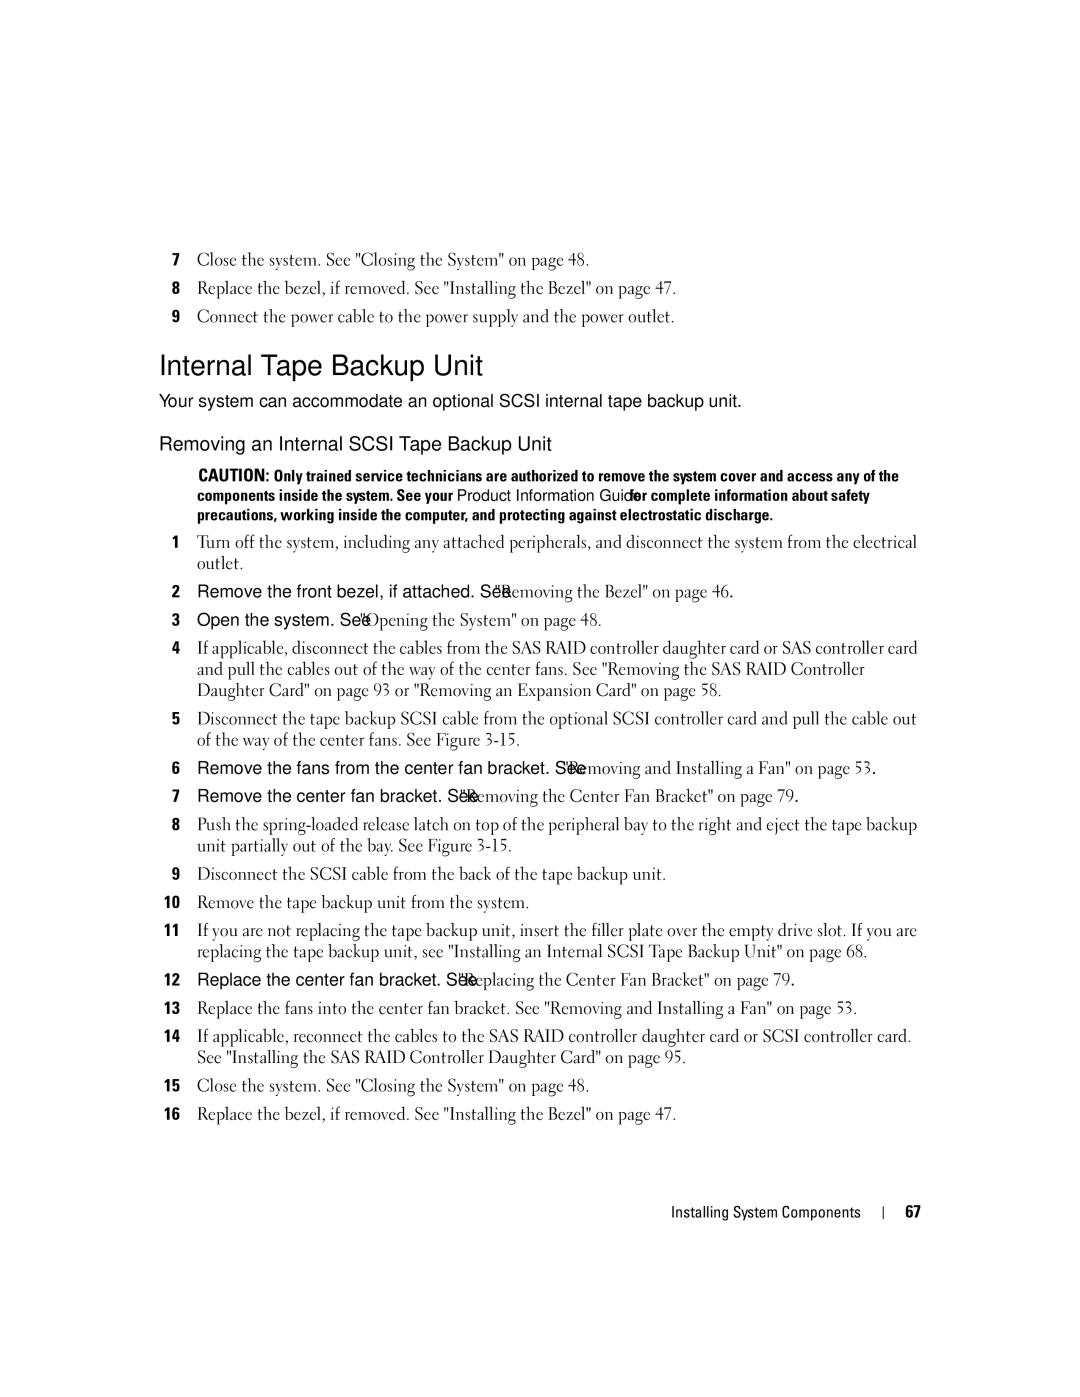 Dell 1900 owner manual Internal Tape Backup Unit, Removing an Internal Scsi Tape Backup Unit 